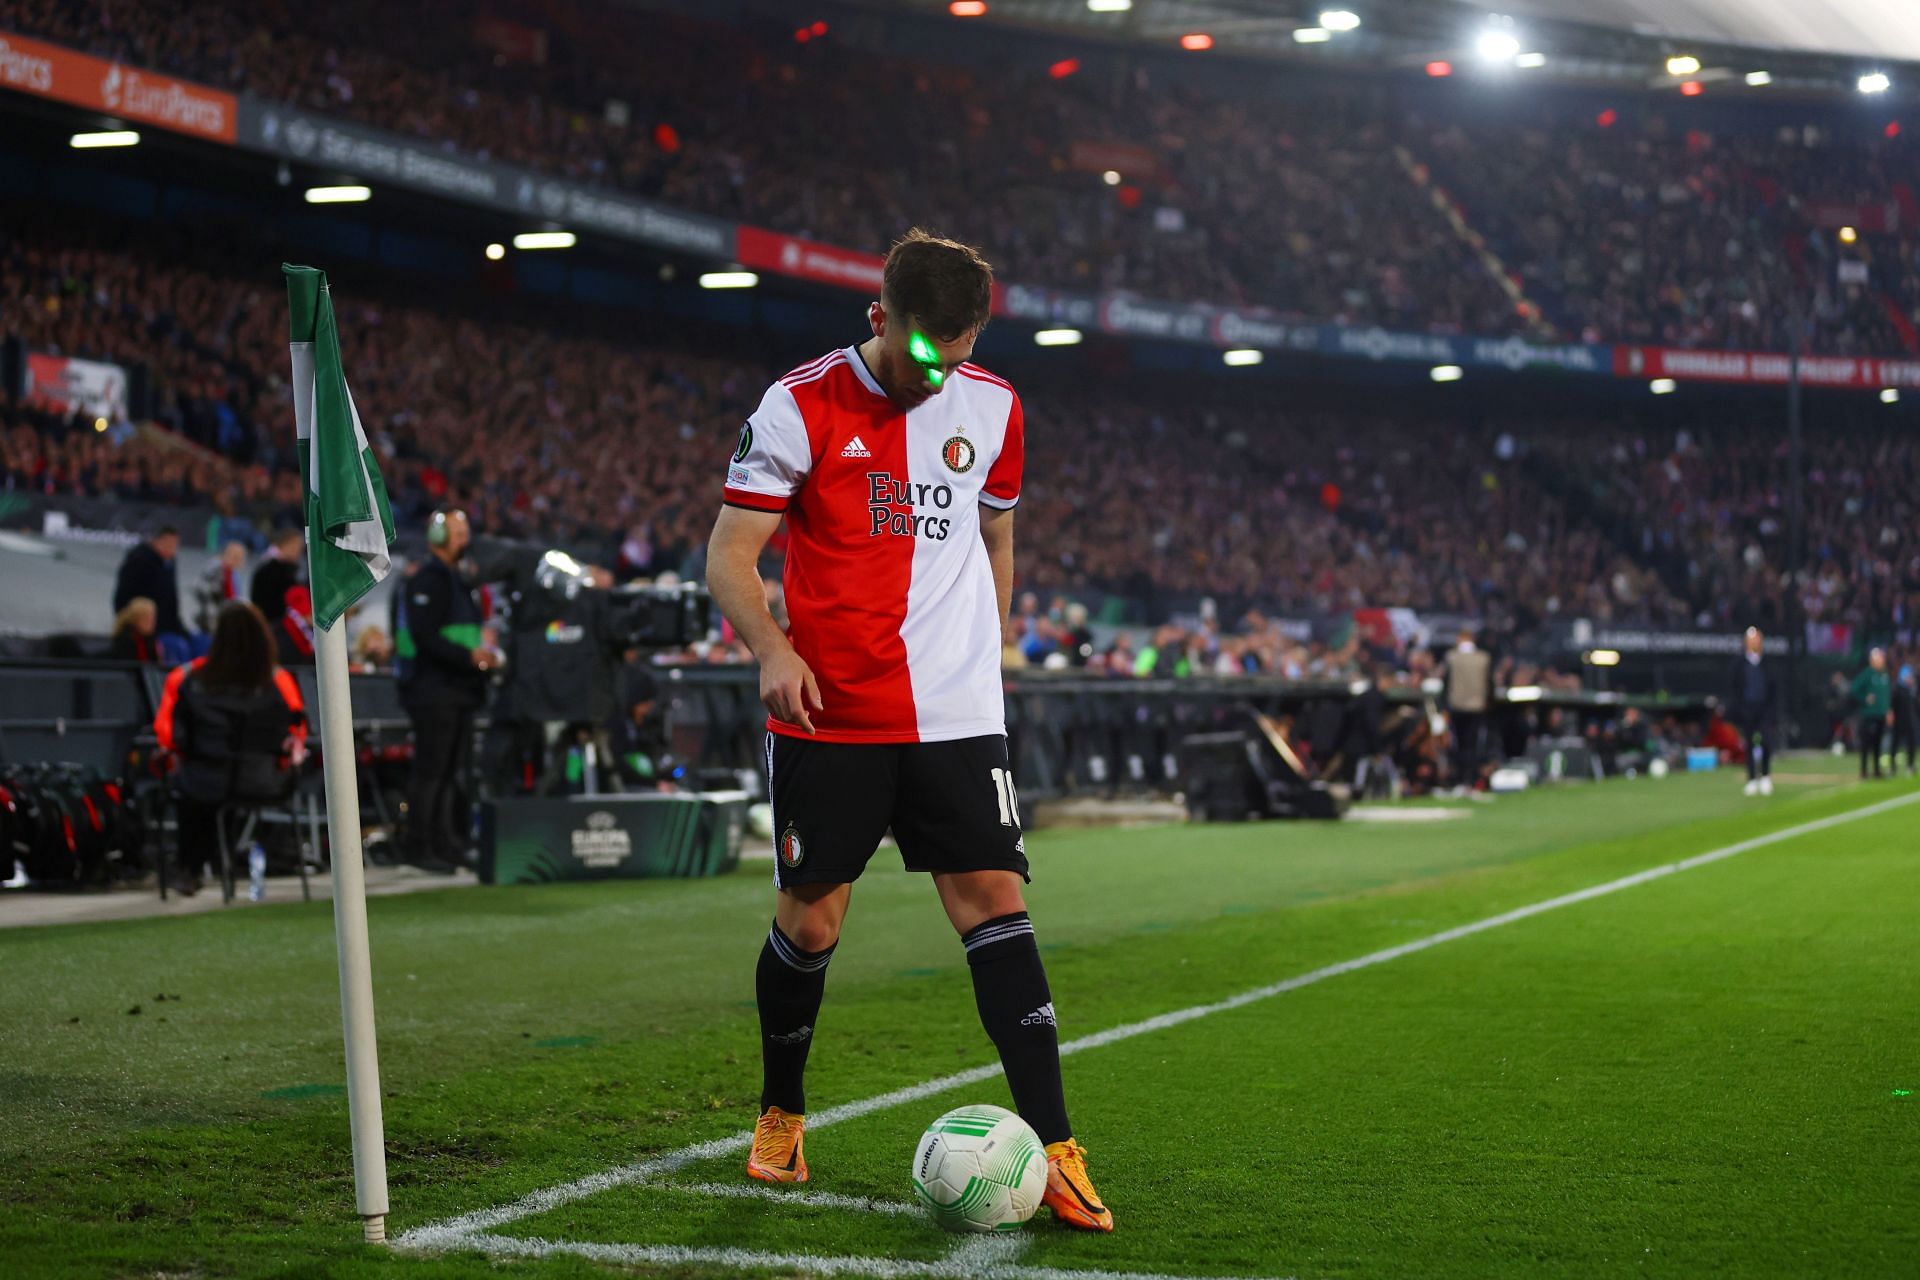 Feyenoord will host Twente on Sunday - Eredivisie